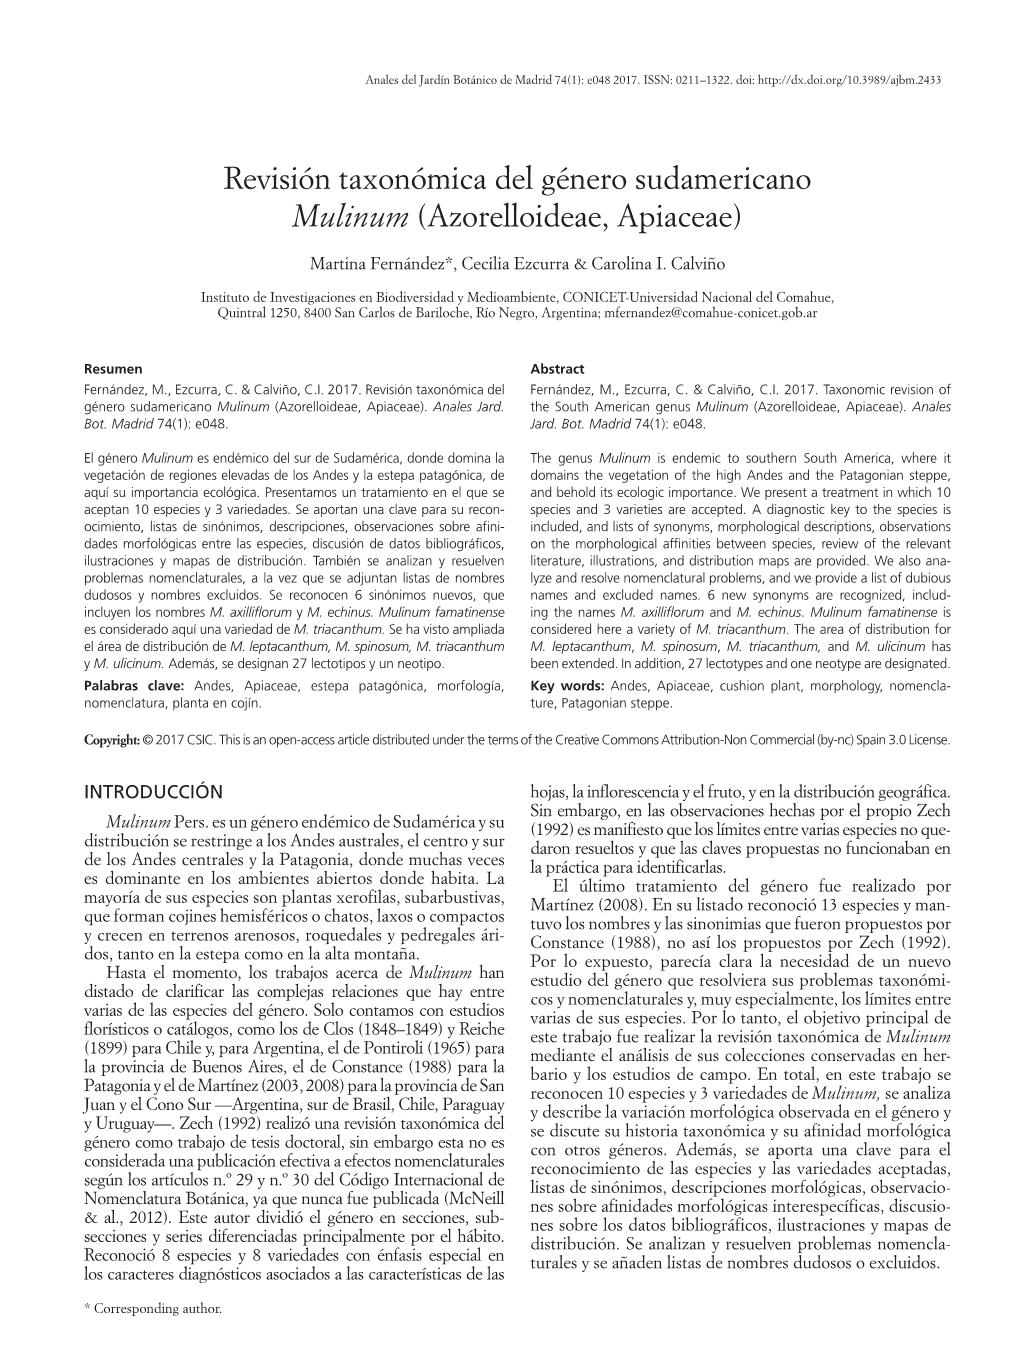 Revisión Taxonómica Del Género Sudamericano Mulinum (Azorelloideae, Apiaceae)